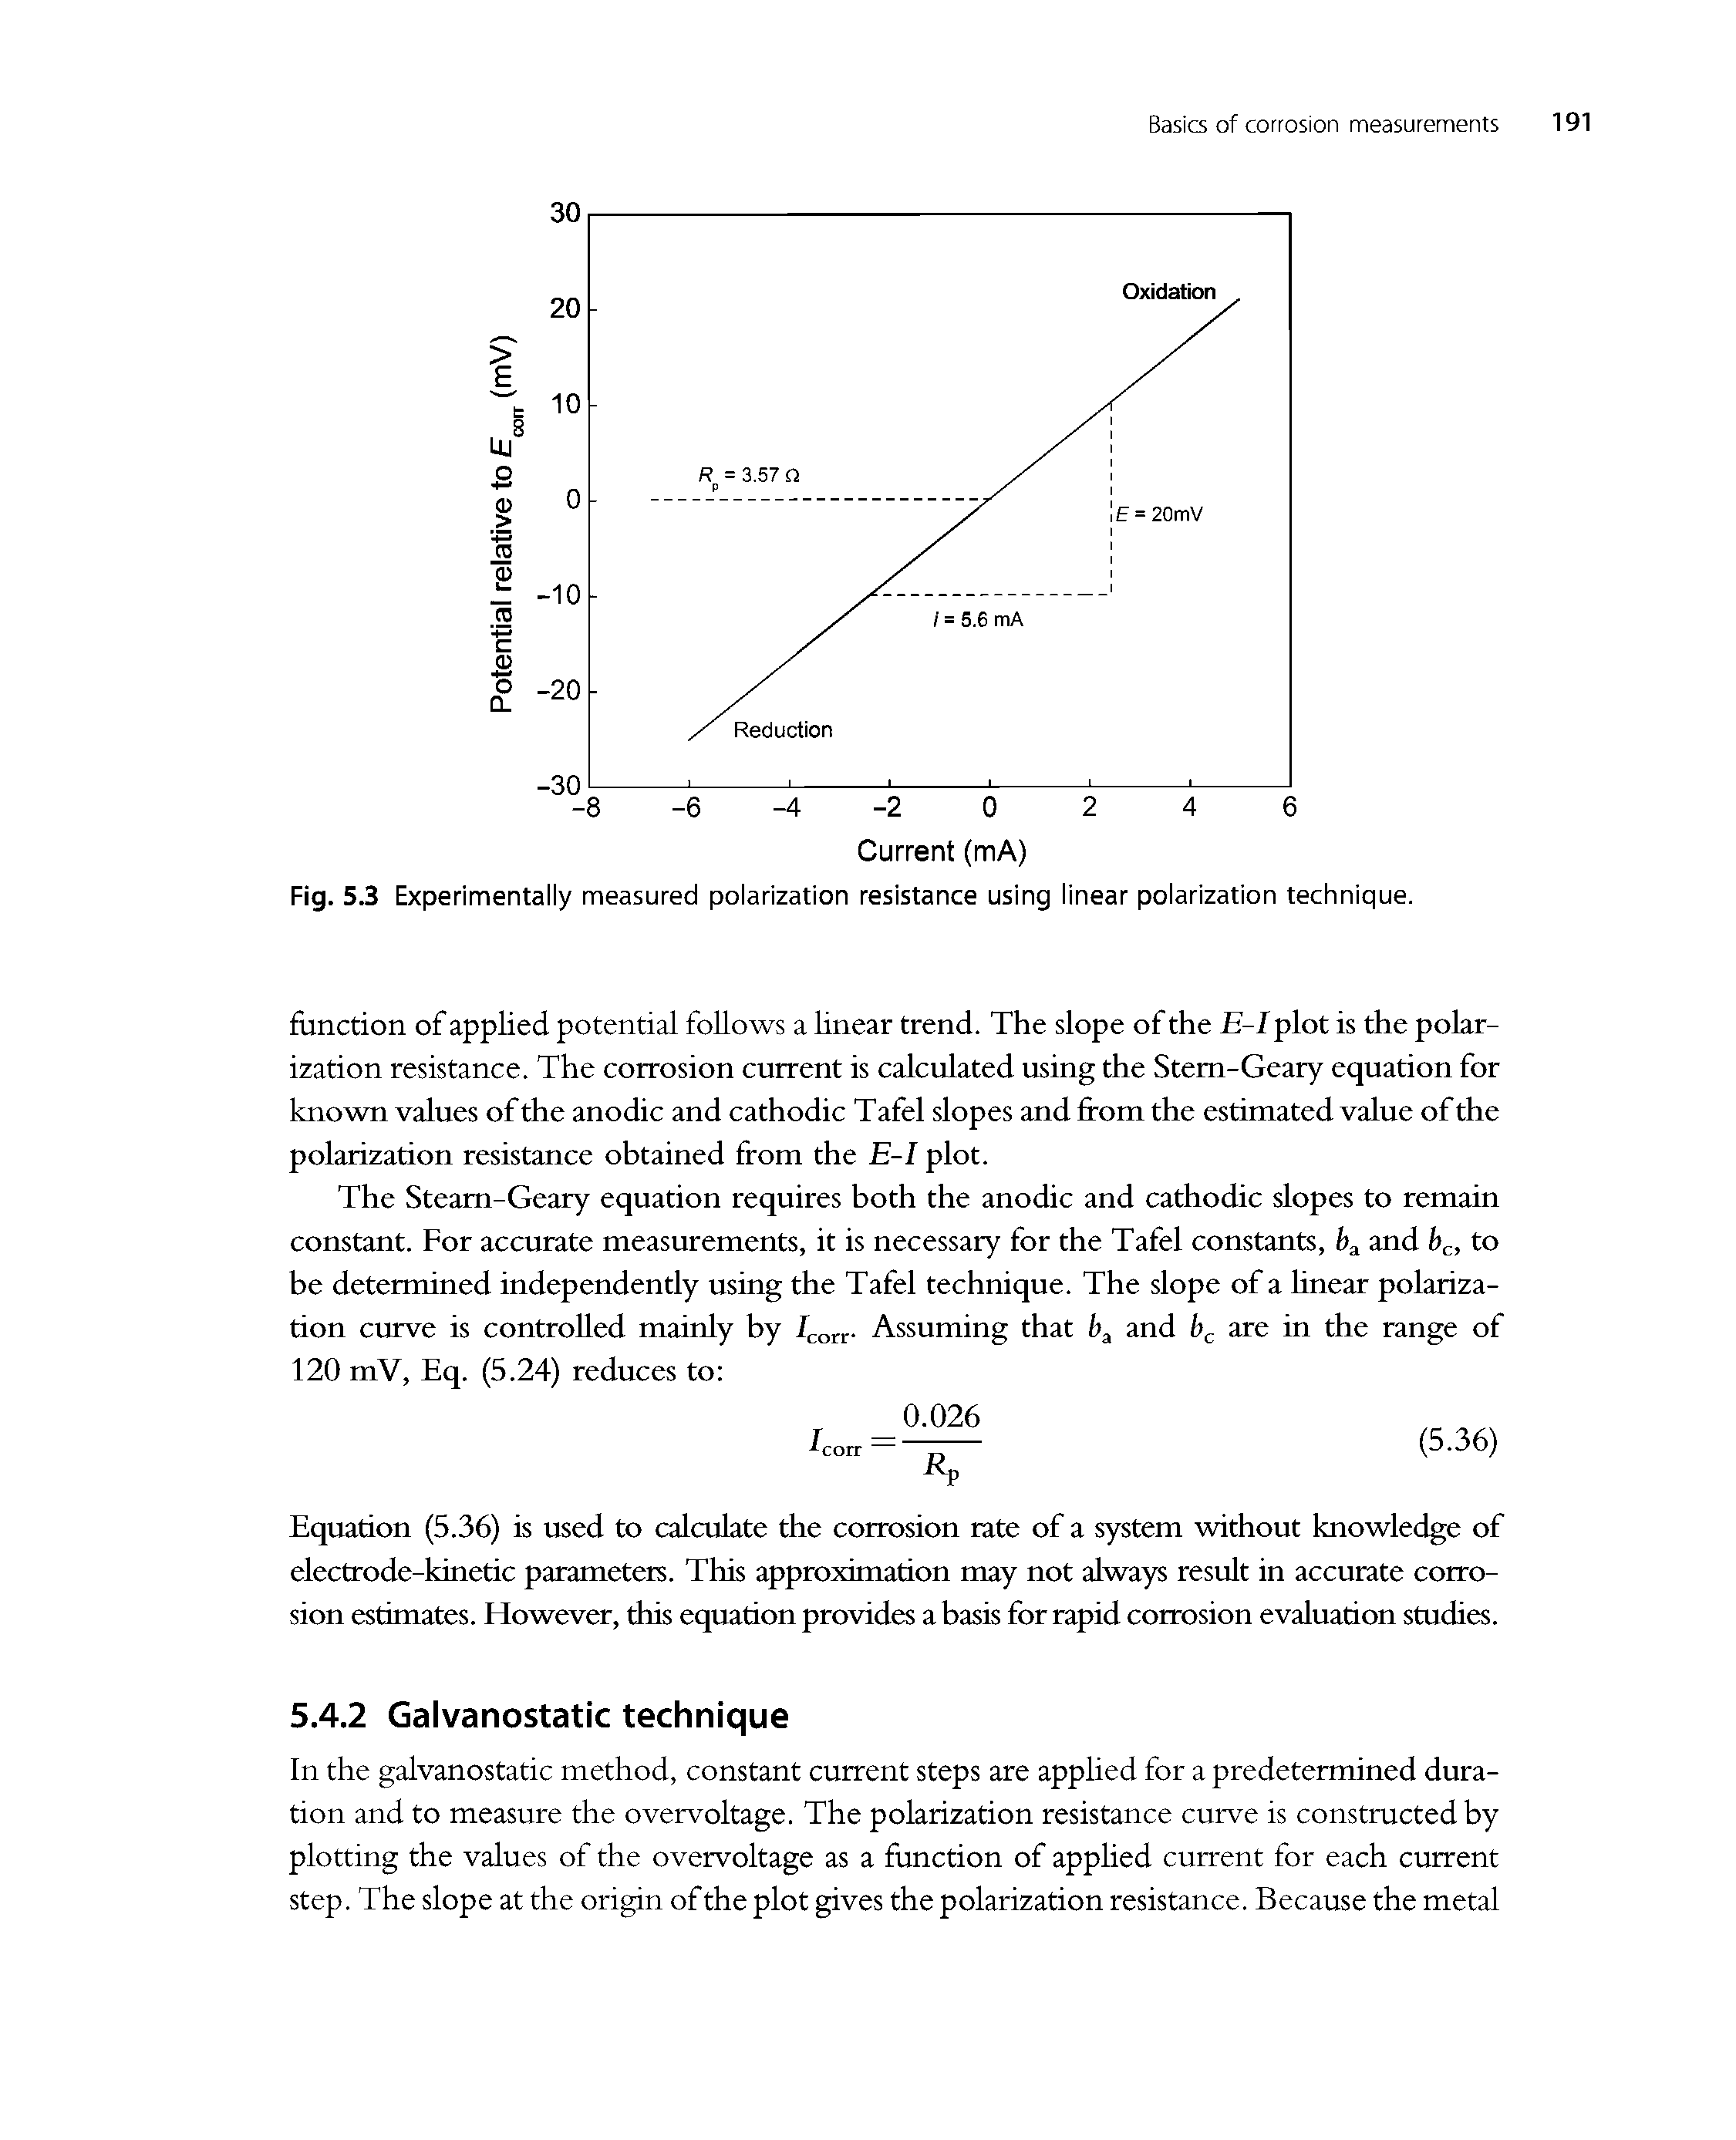 Fig. 5.3 Experimentally measured polarization resistance using linear polarization technique.